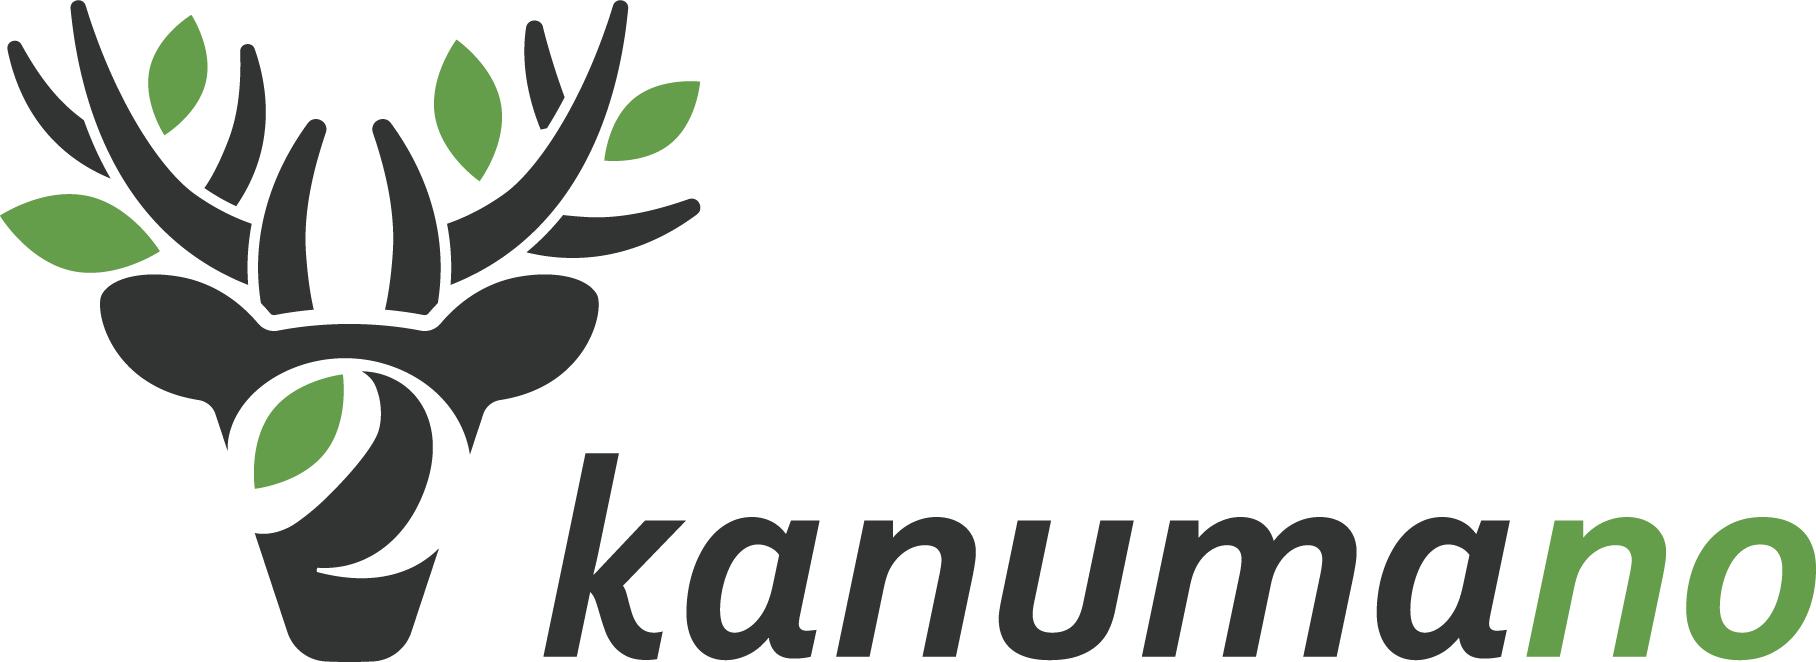 kanumano